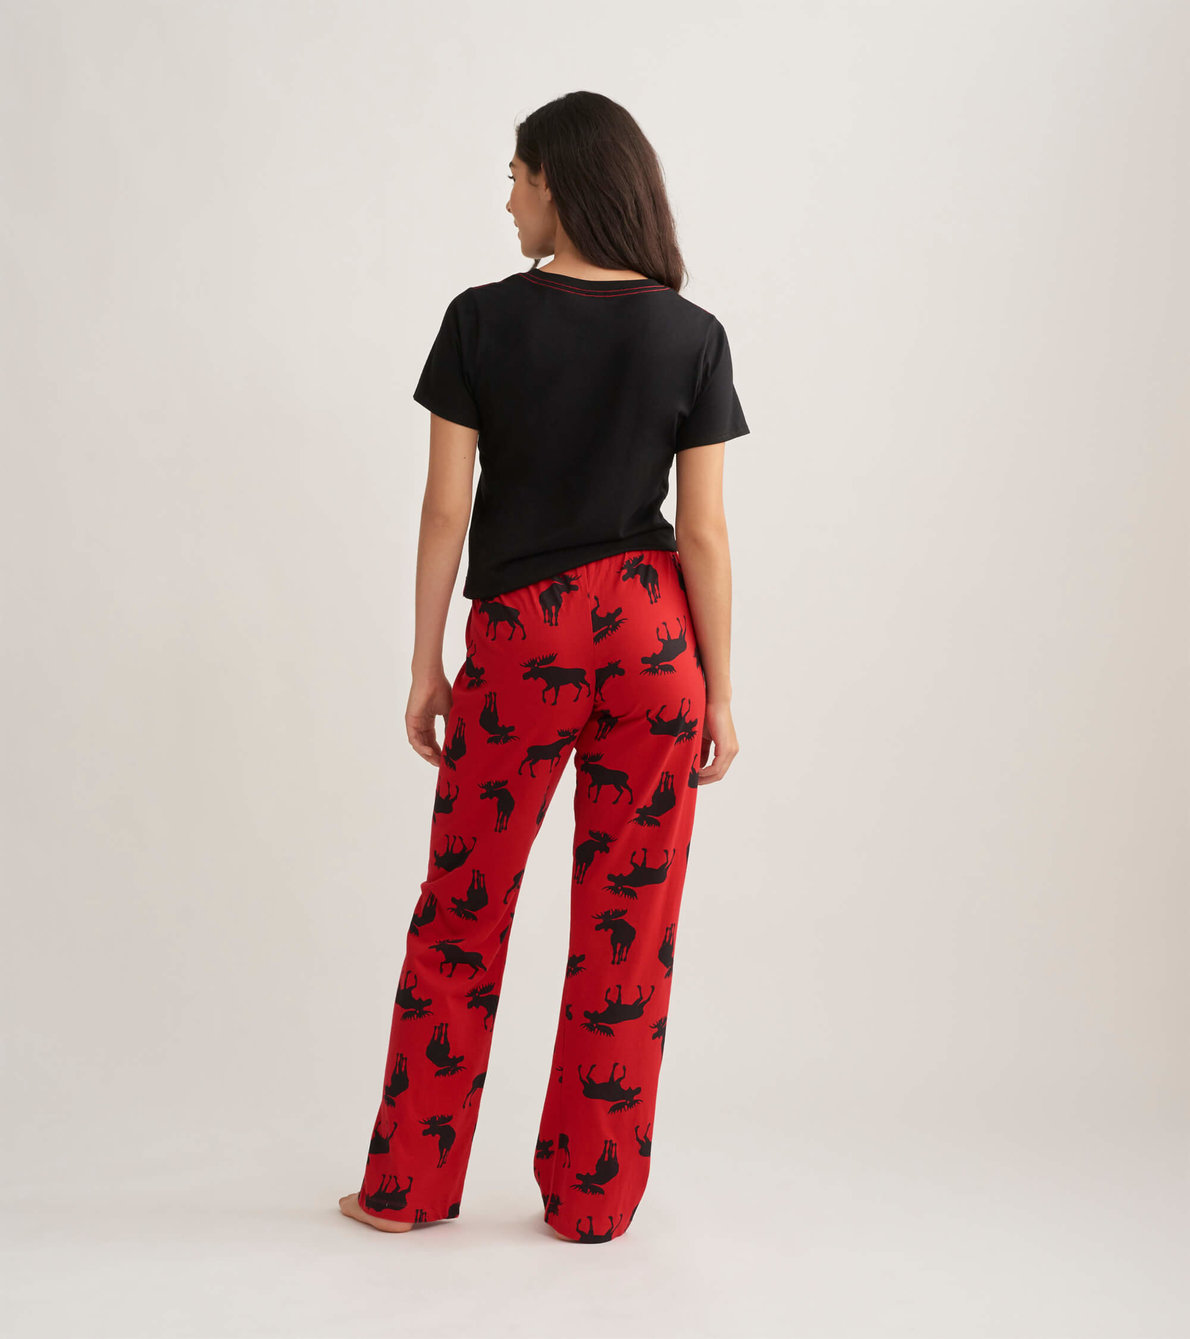 View larger image of Moose on Red Women's Jersey Pajama Pants